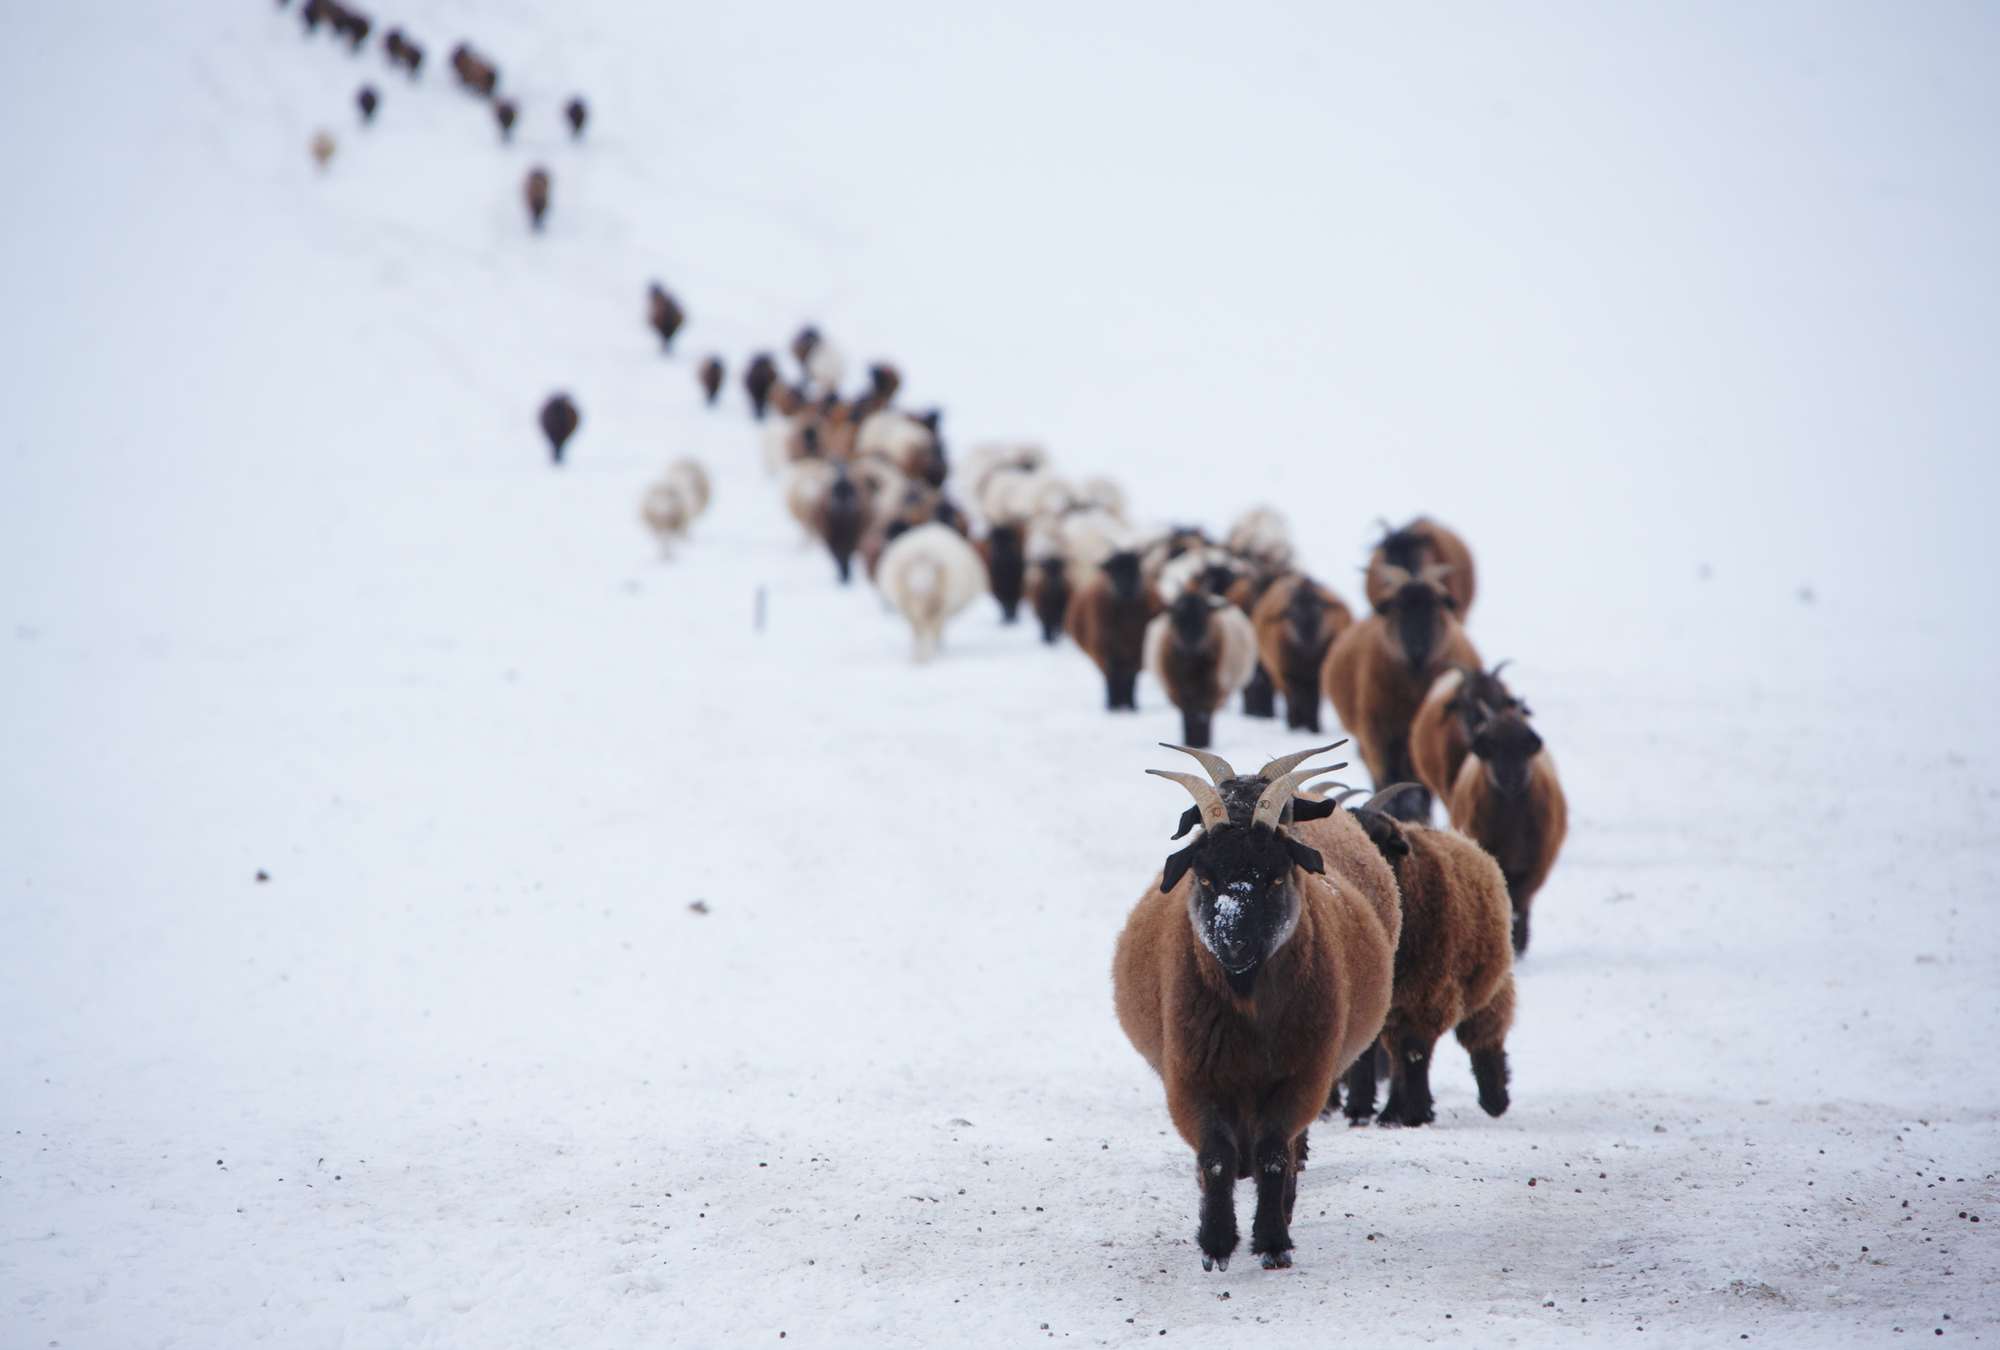             Herde – Fototapete Tiere im Schnee
        